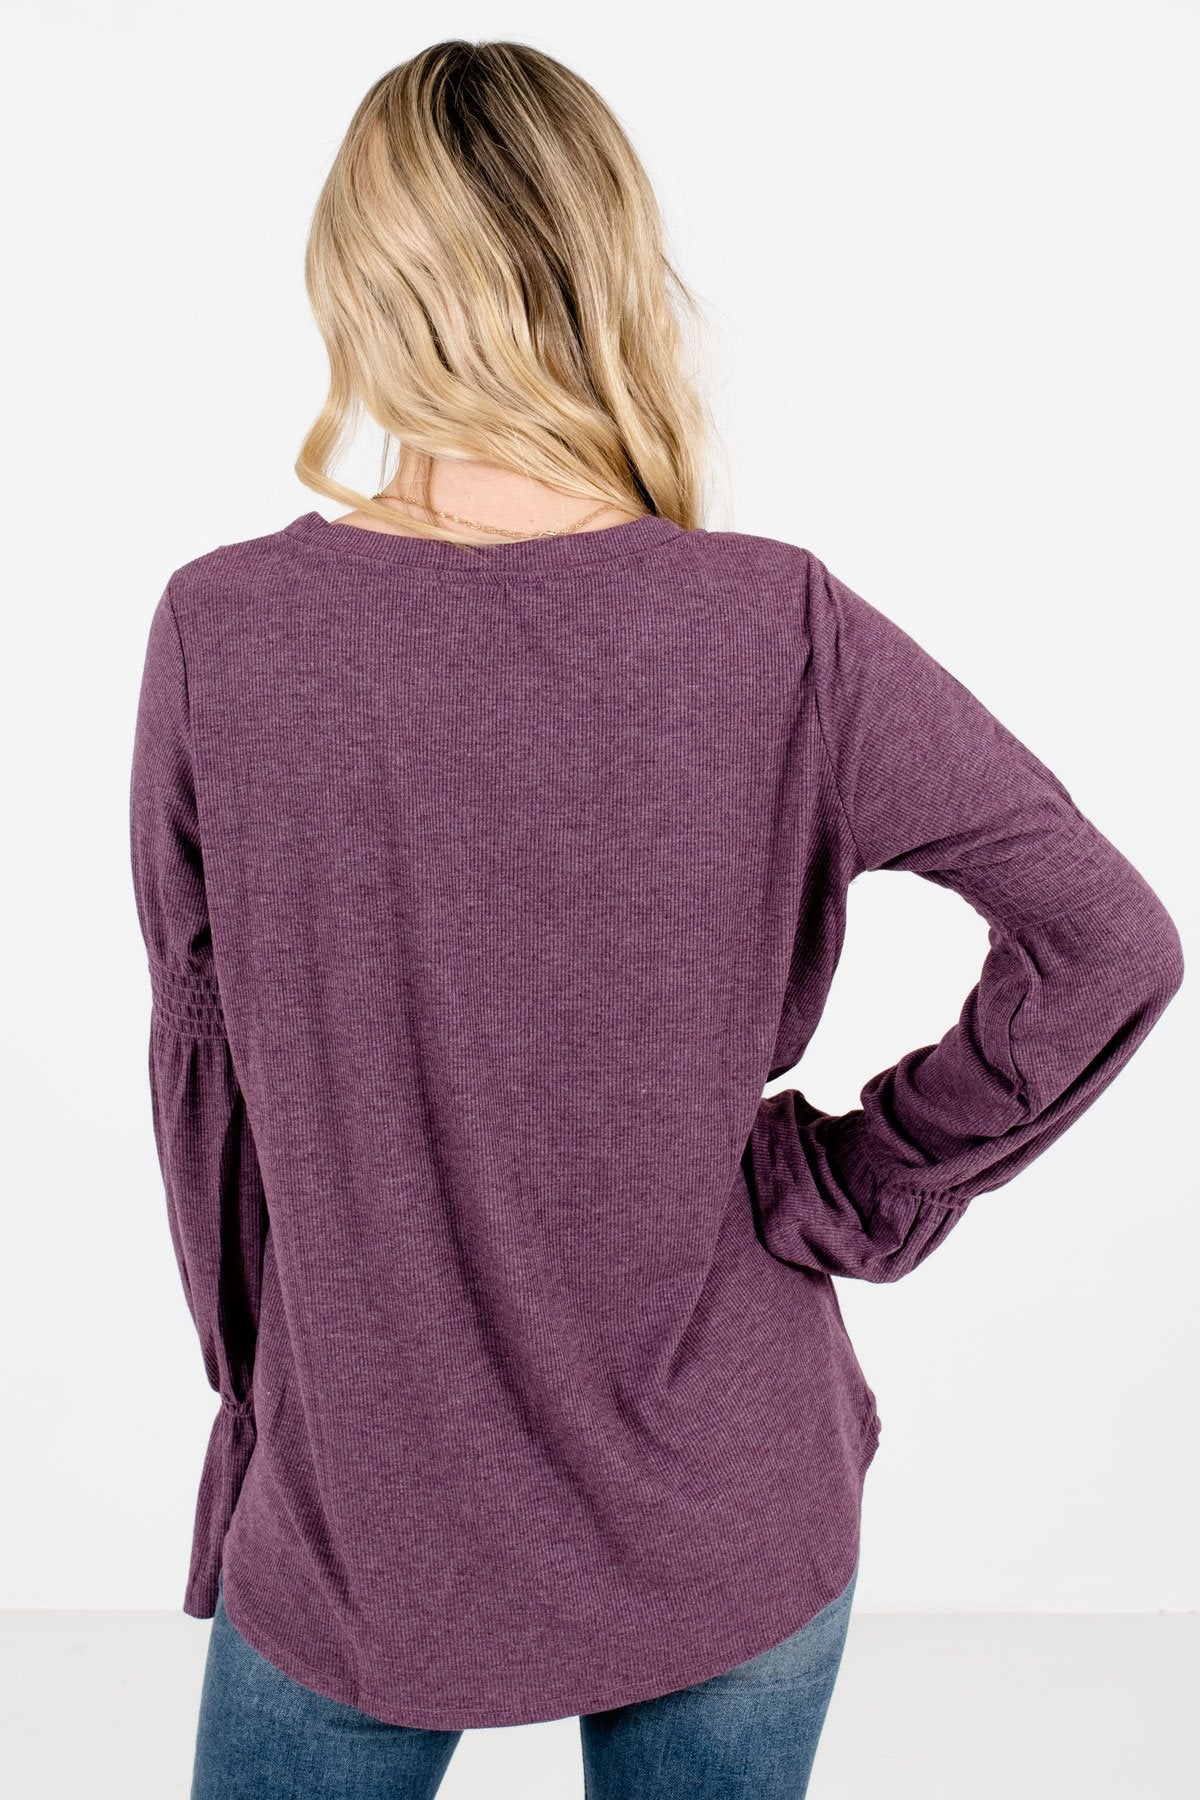 Women’s Purple Bell Sleeve Style Boutique Tops